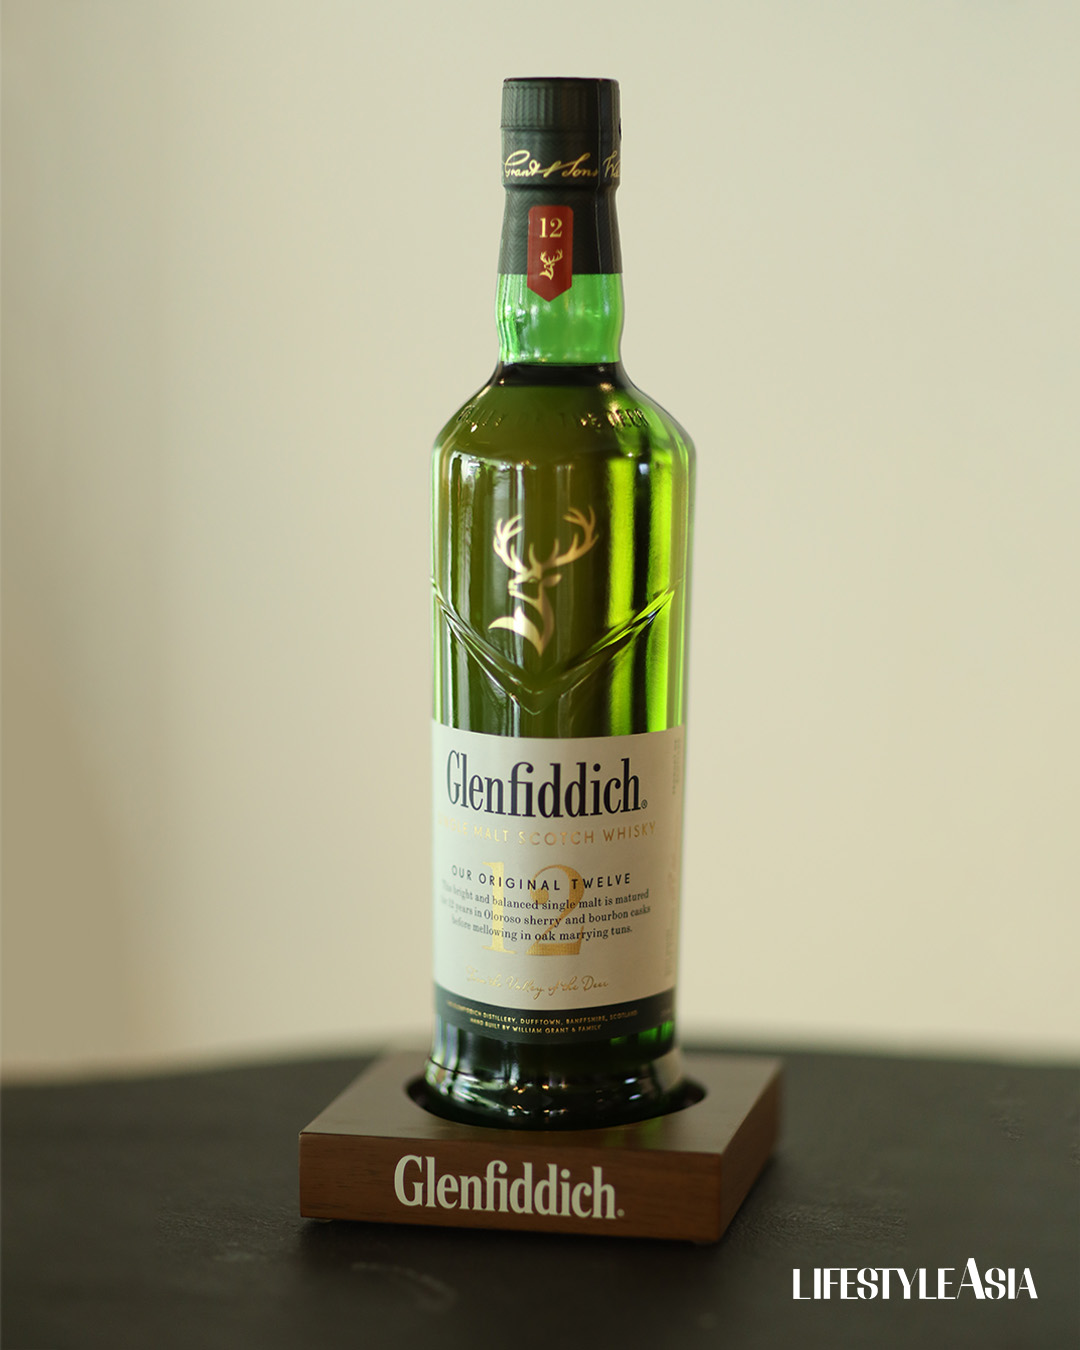 Glenfiddich 12 Year Old Single Malt Whisky in a green bottle